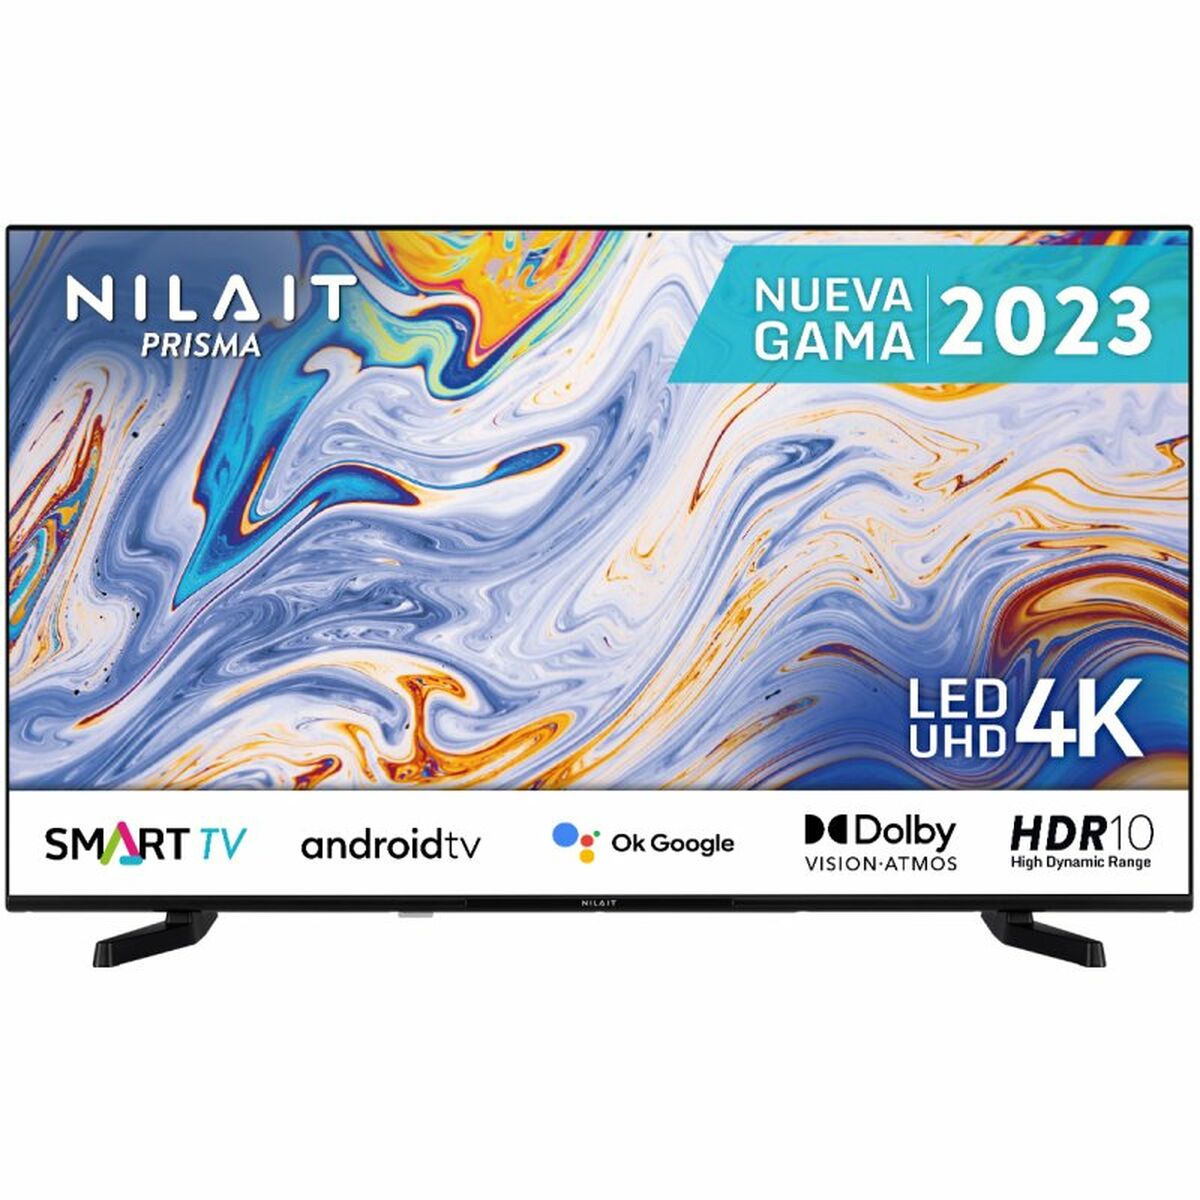 Nilait Prisma NI-32HB7001SW 32 LED HD Ready HDR10 Smart TV Blanca